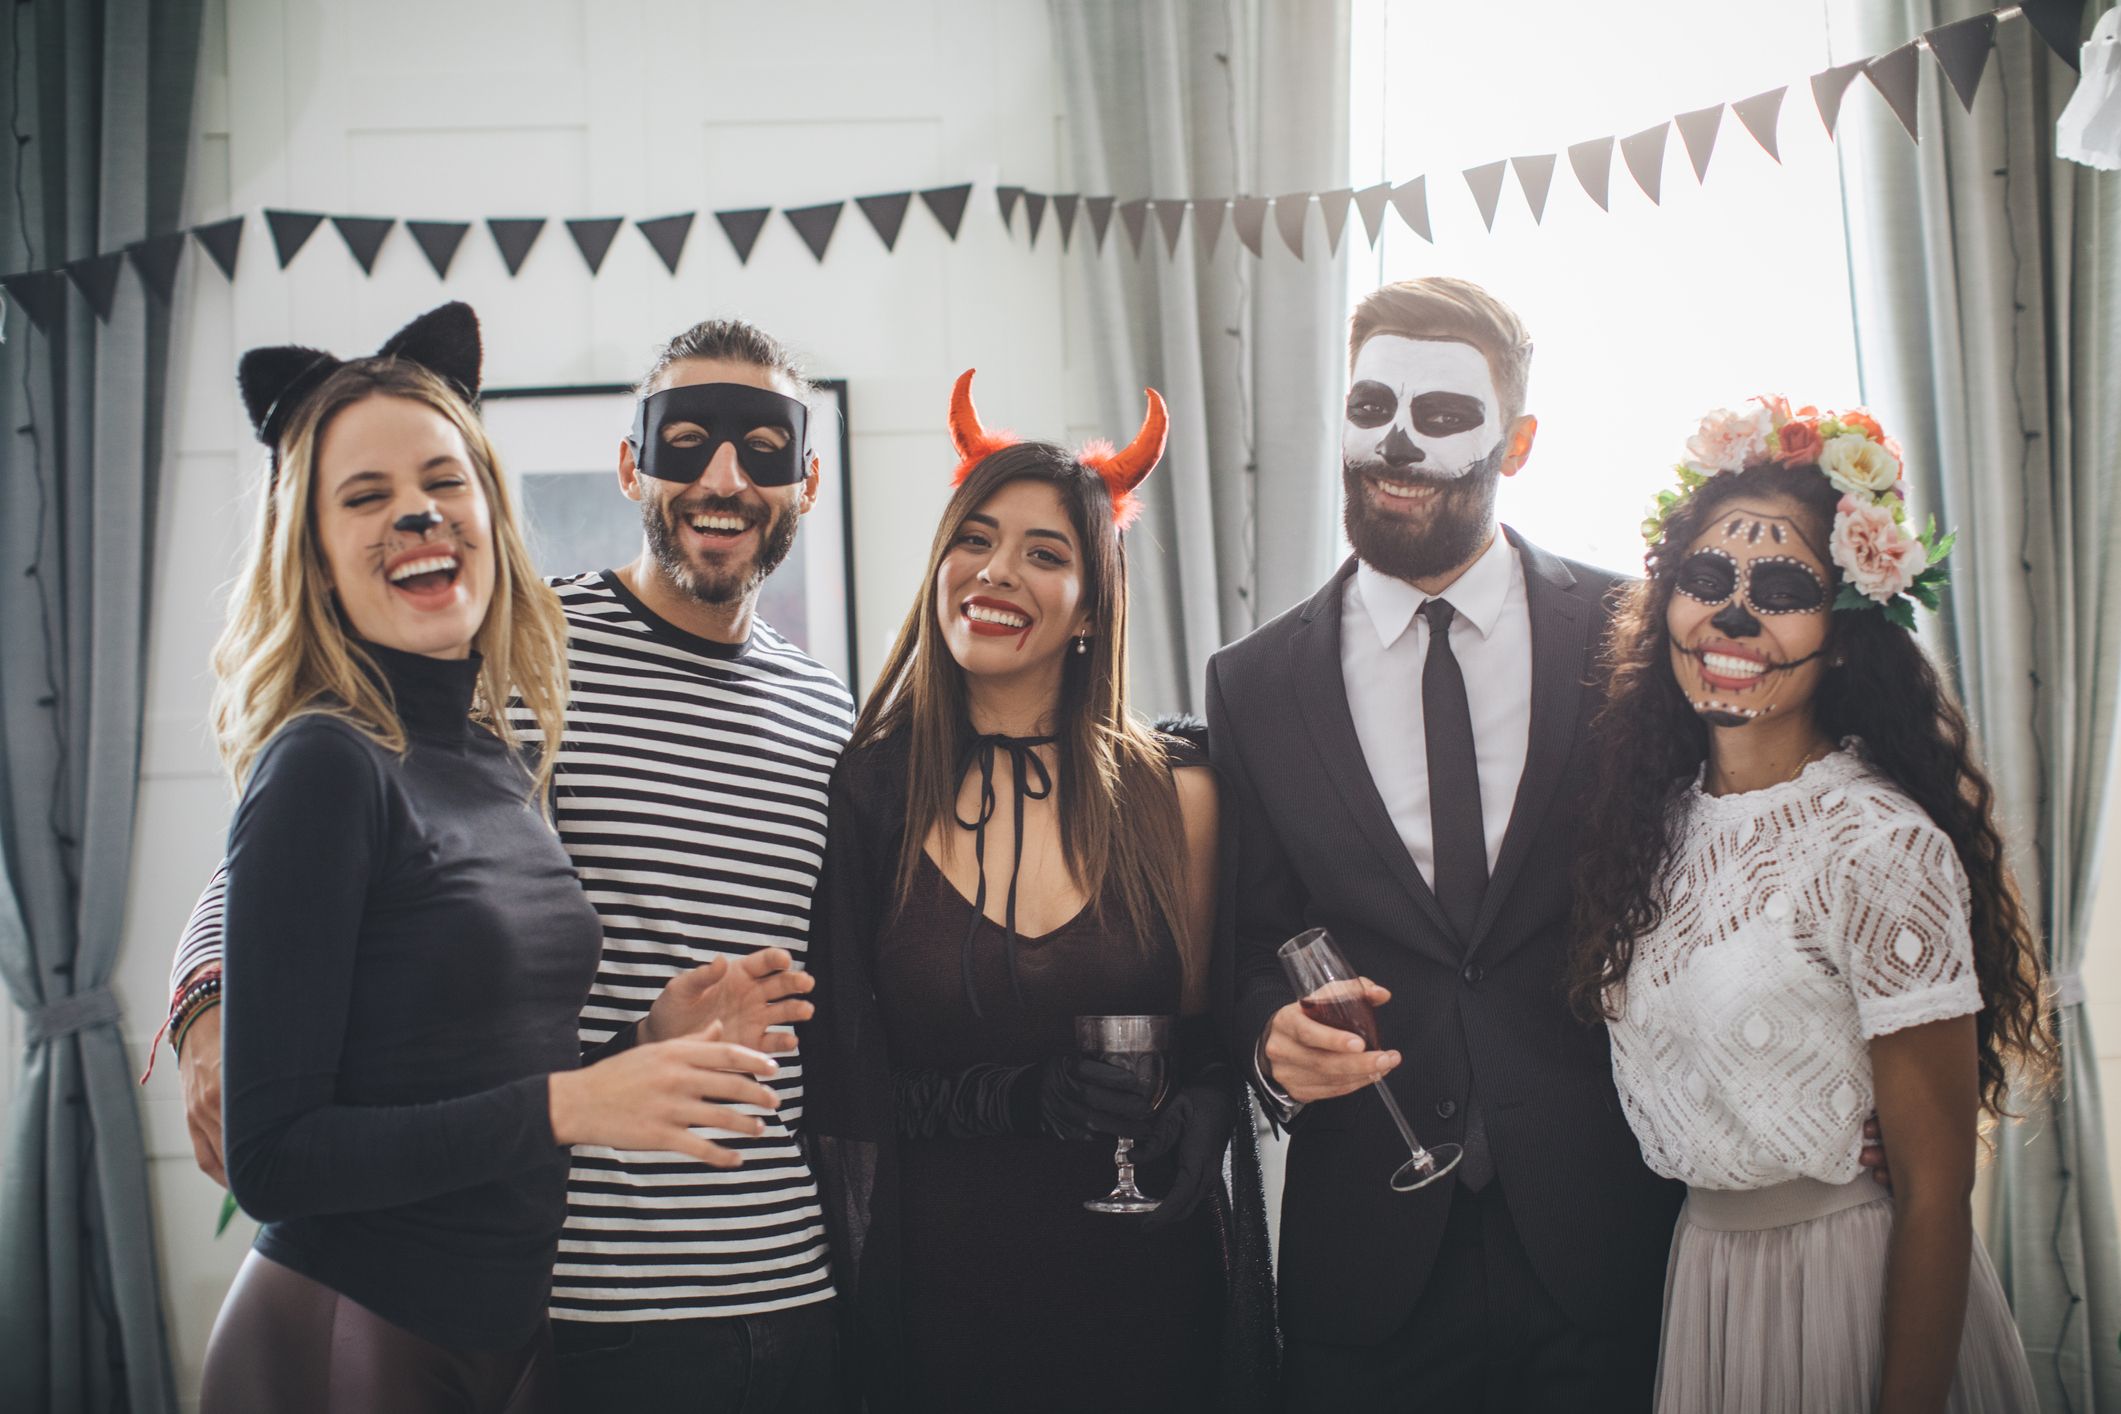 50 Best Halloween Party Themes - Fun Halloween Party Ideas